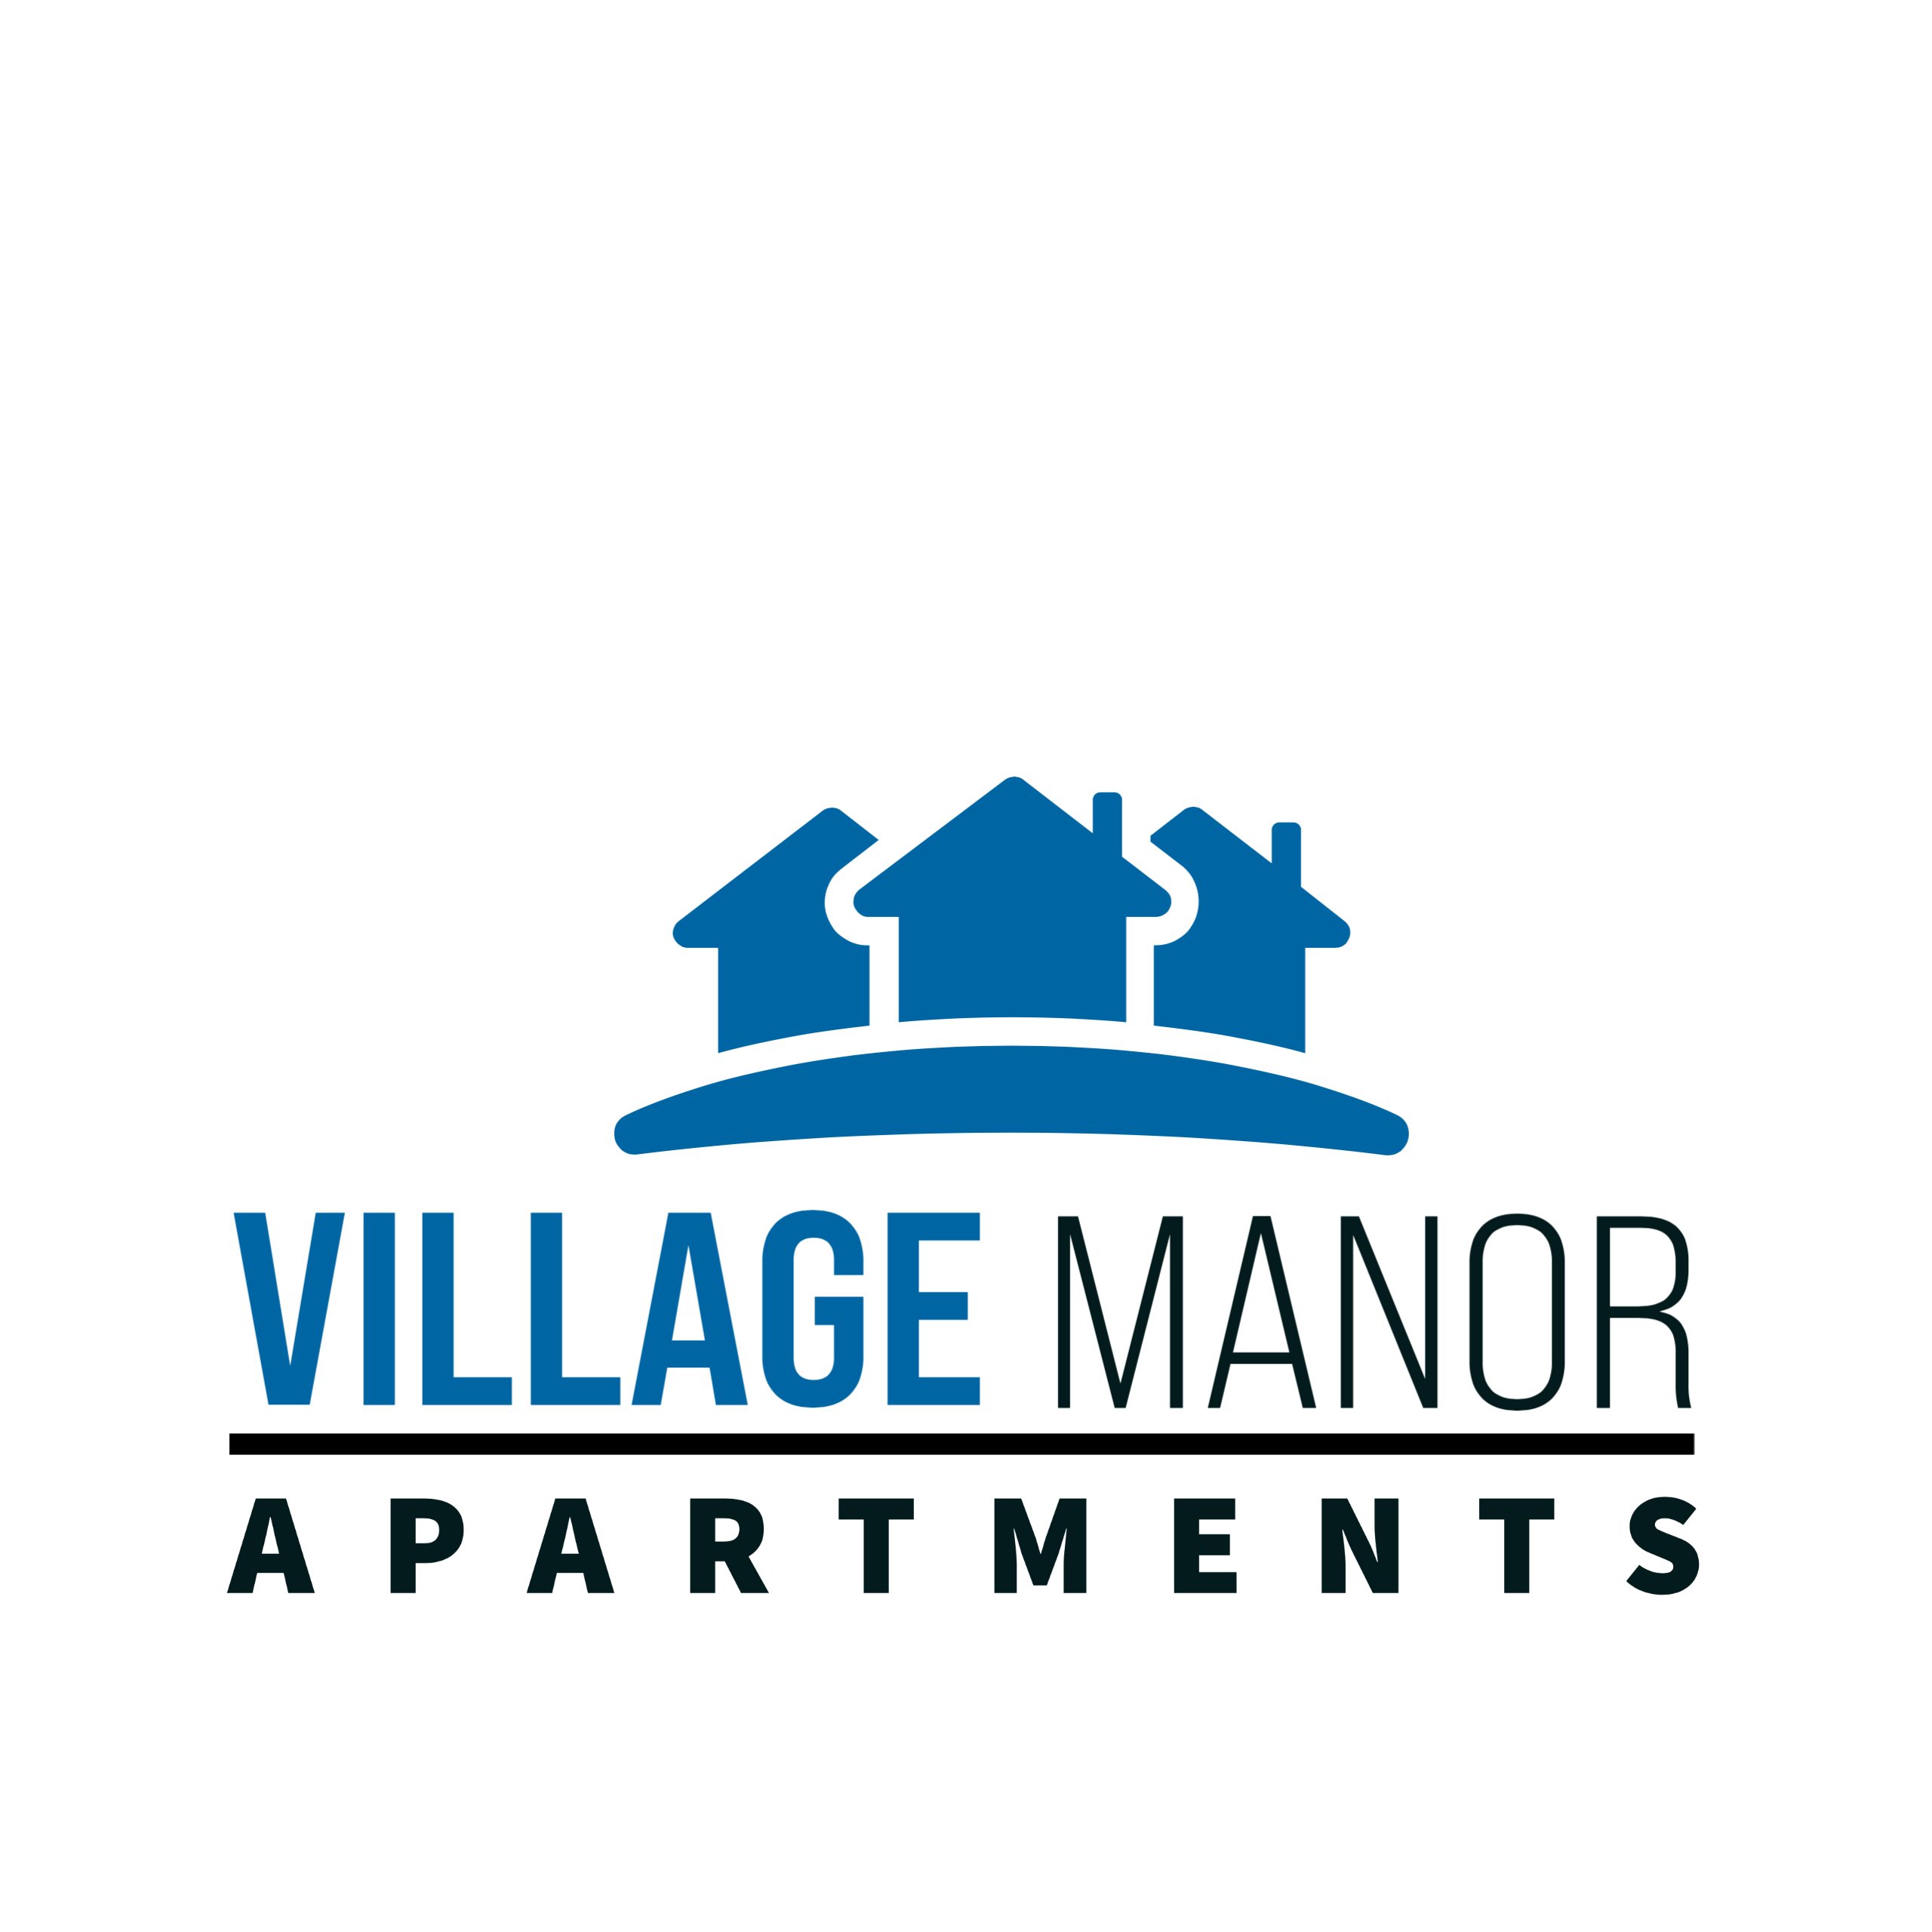 Village manor apartment logo